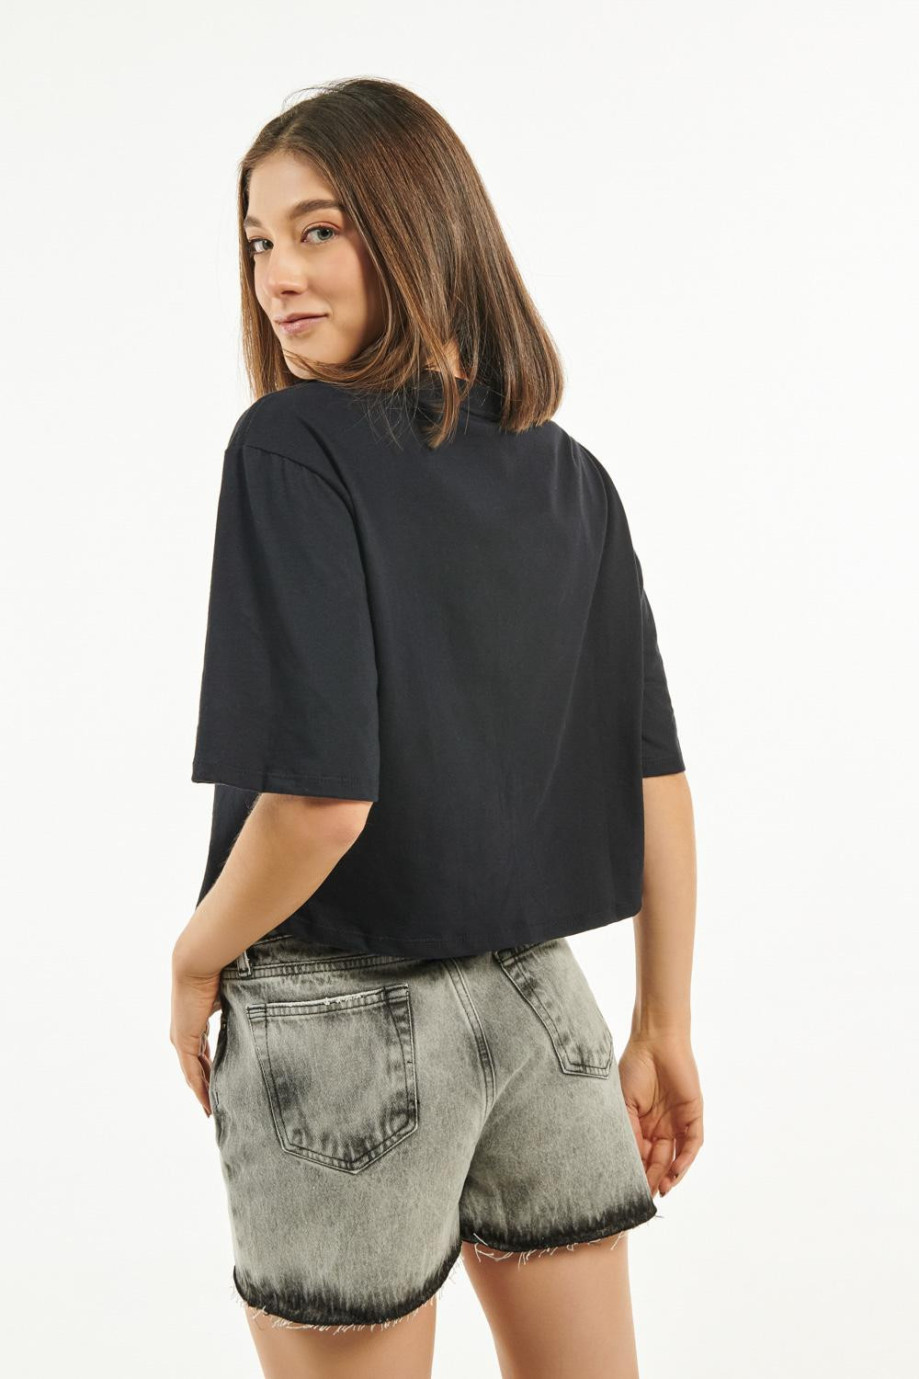 Camiseta oversize negra crop top con diseño de Gasparín